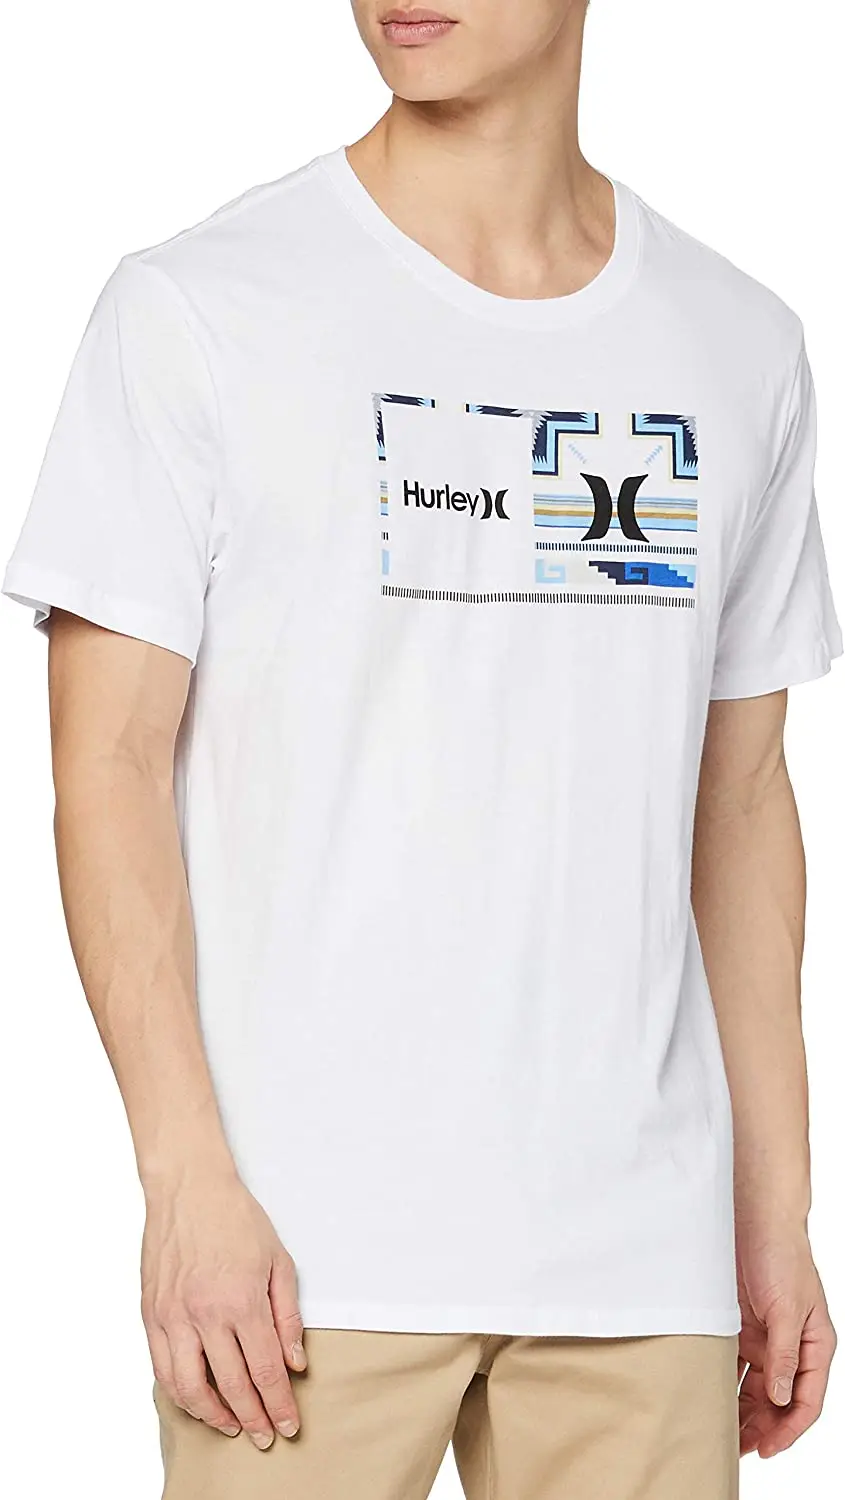 Hurley Native Short-Sleeve T-Shirt - Men's White, XL